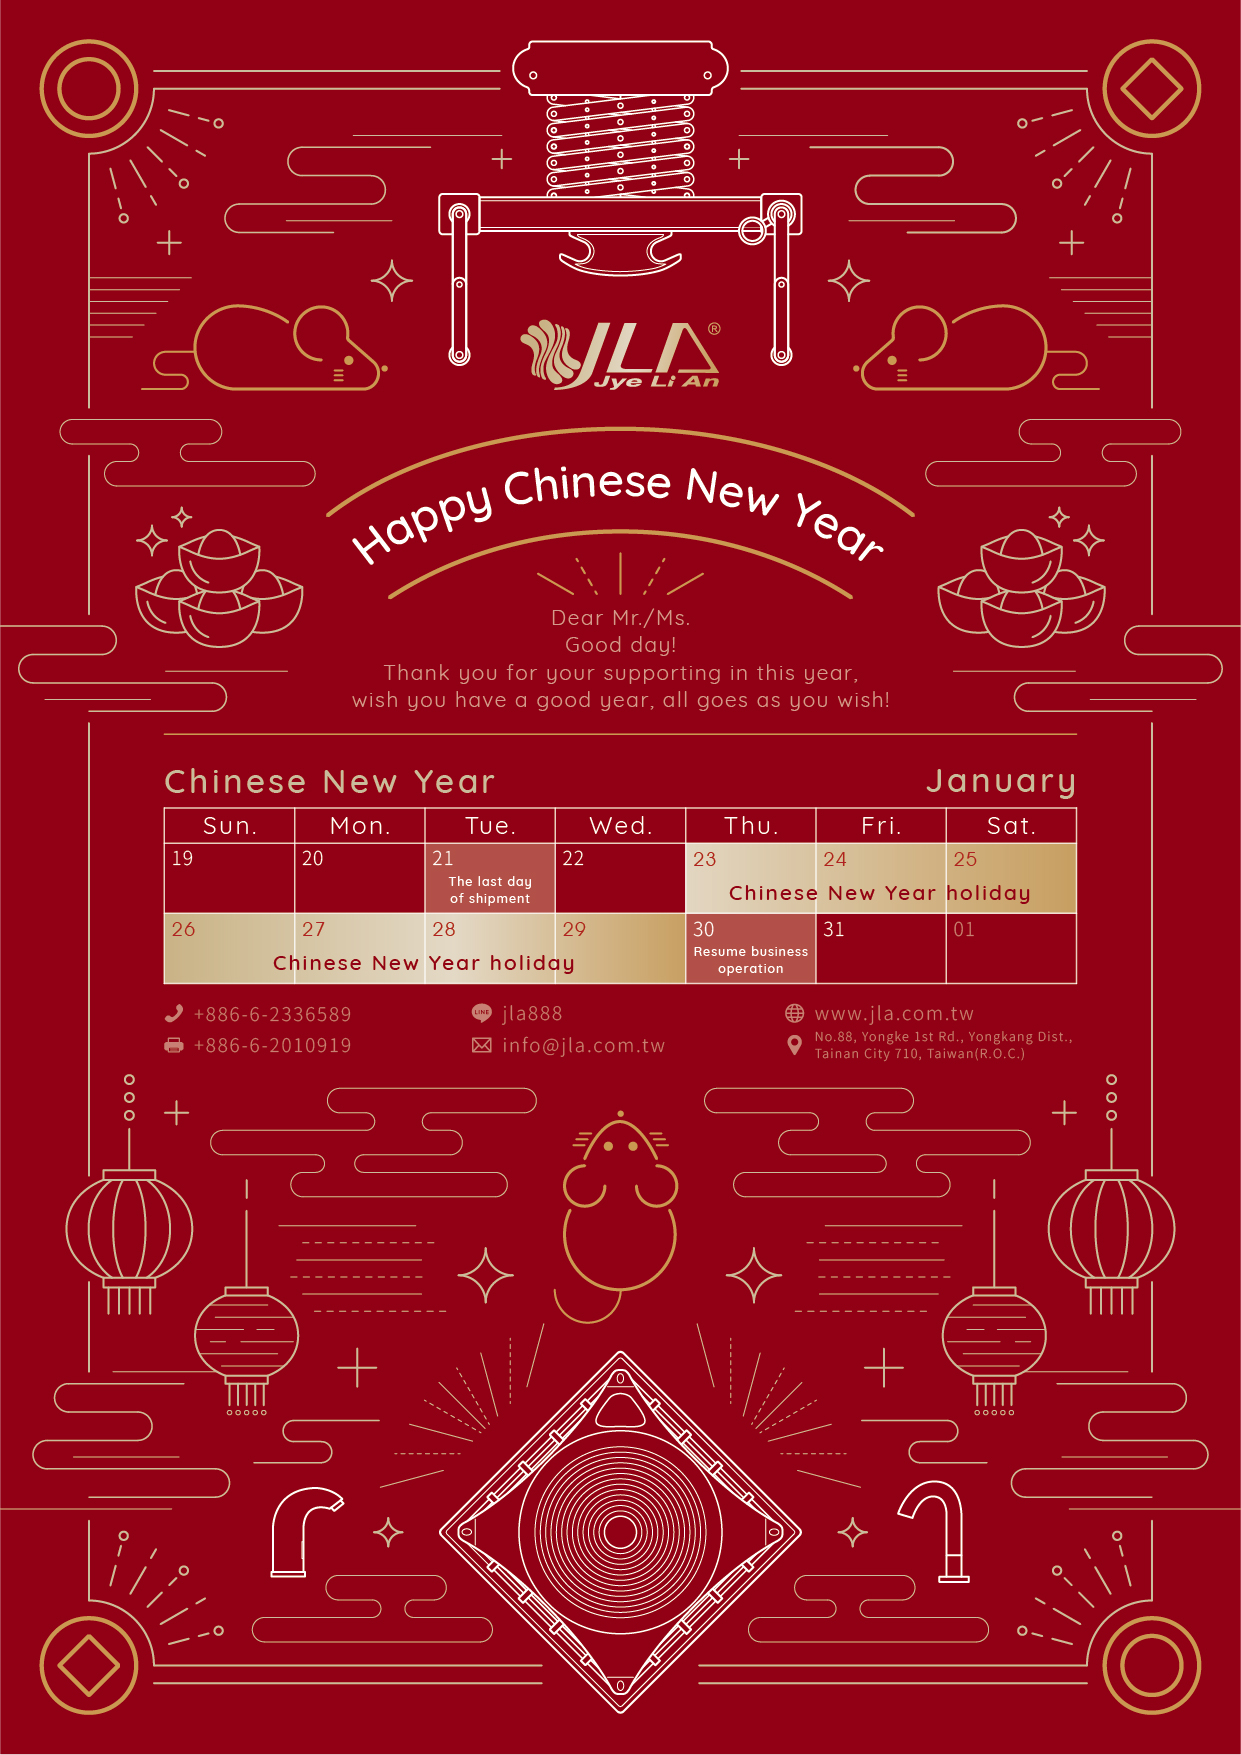 Happy Chinese New Year 2020!